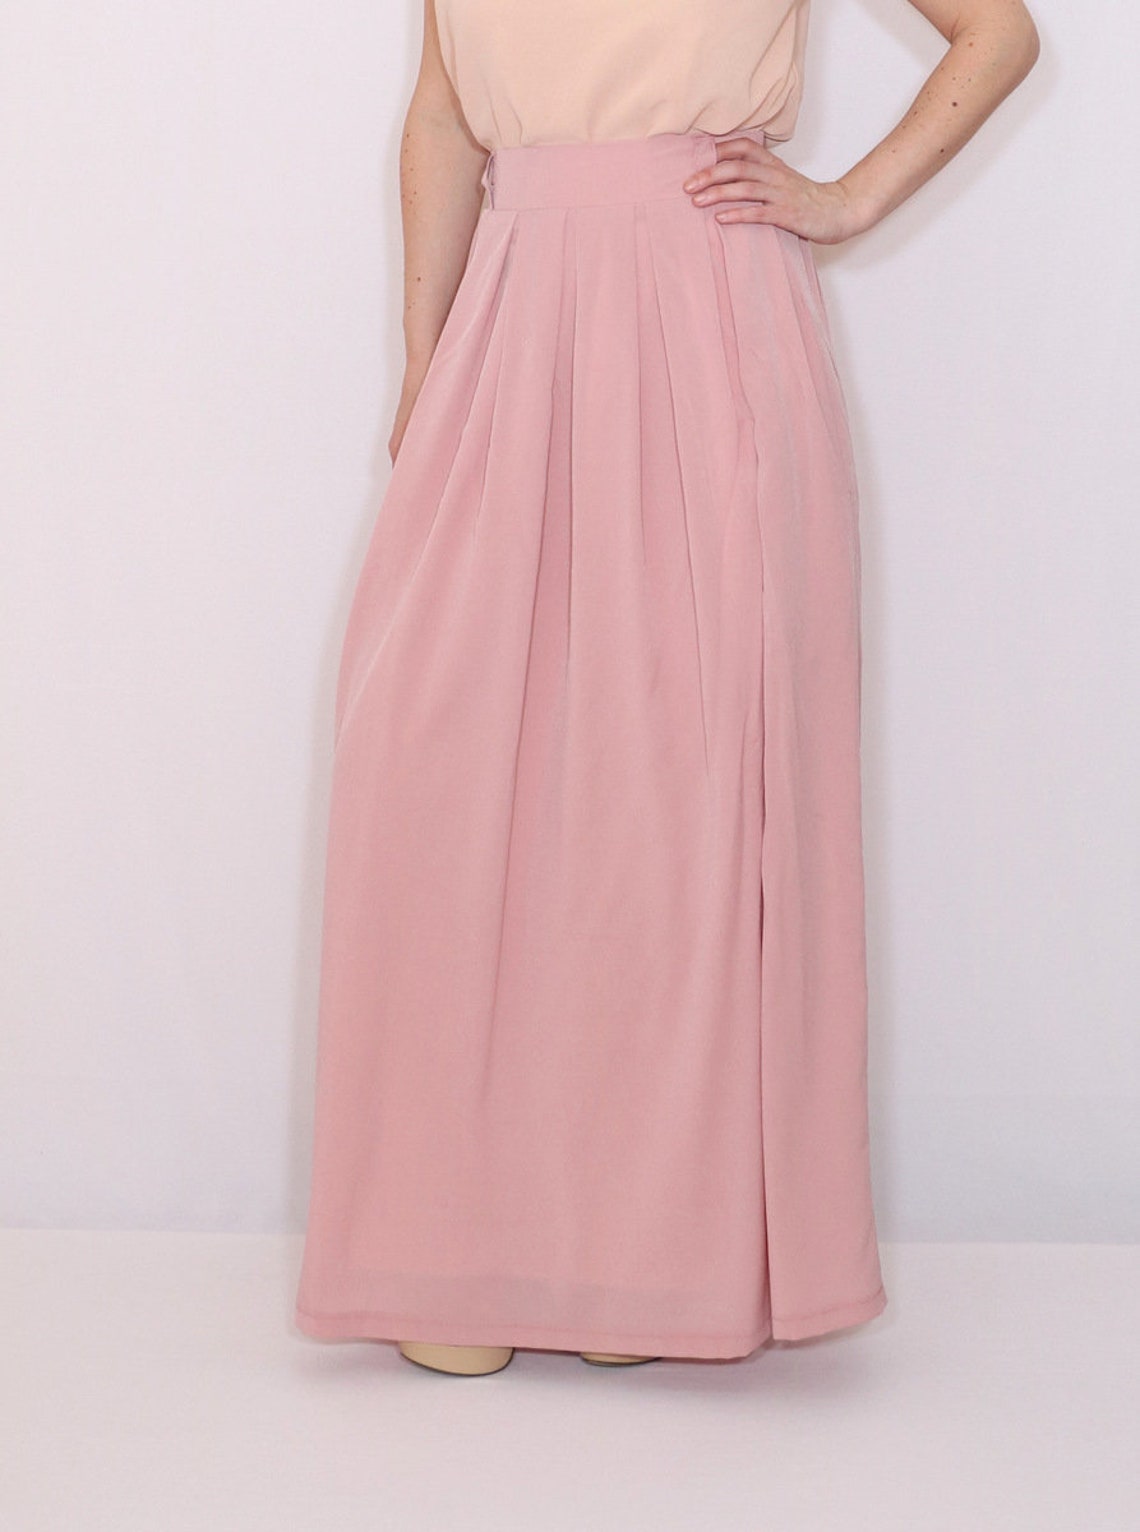 Blush pink chiffon maxi skirt with pockets long pleat skirt | Etsy